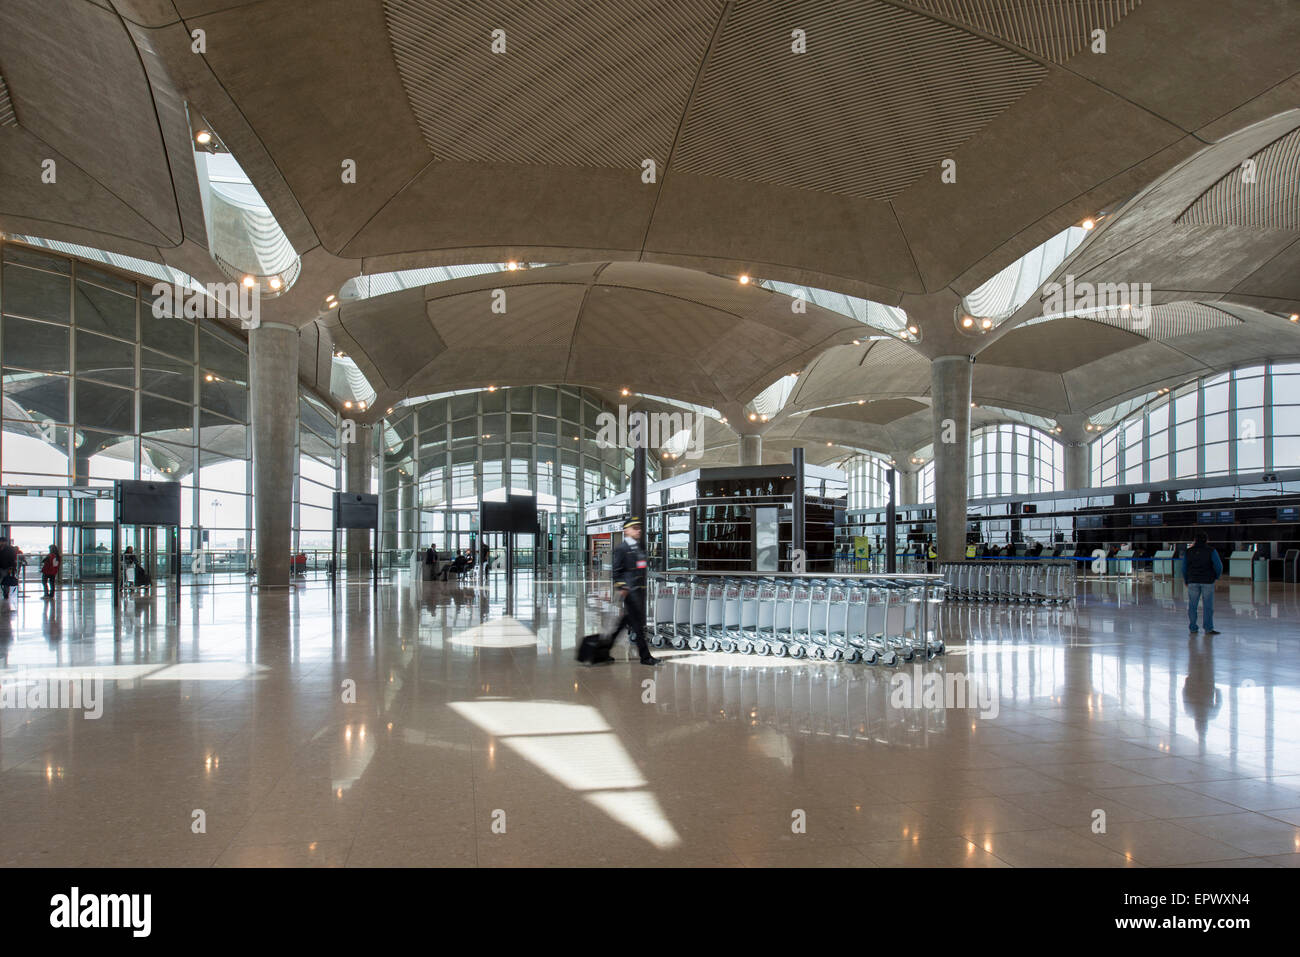 Queen Alia International Airport, Amman, Jordan. Stock Photo